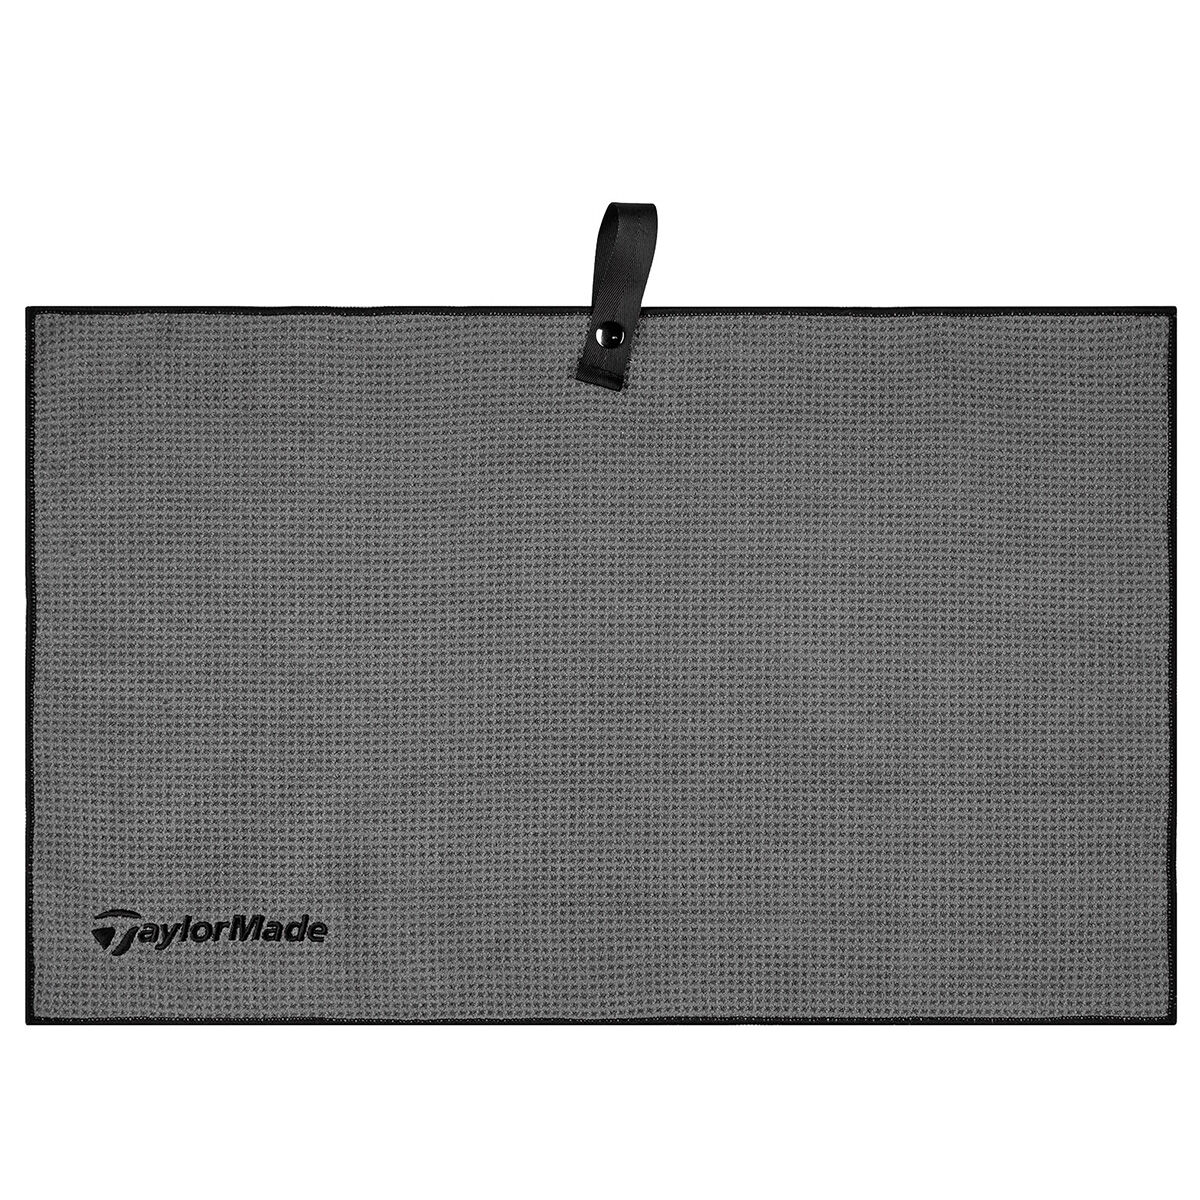 TaylorMade Grey Microfiber Cart Towel, 15x24" | American Golf